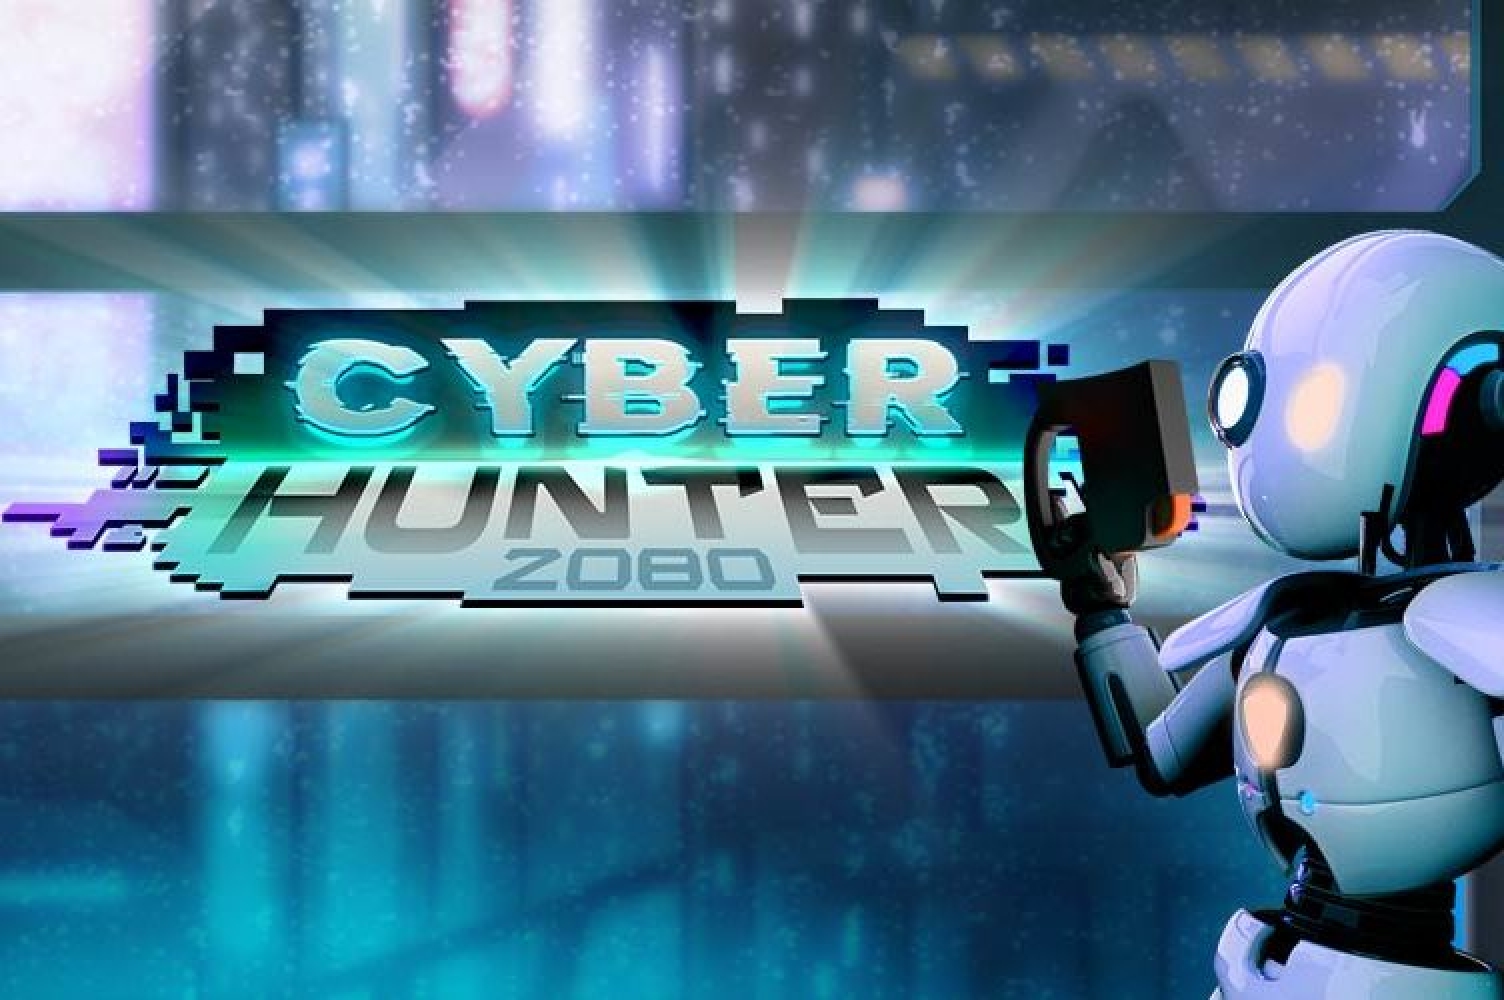 Cyber Hunter 2080 demo